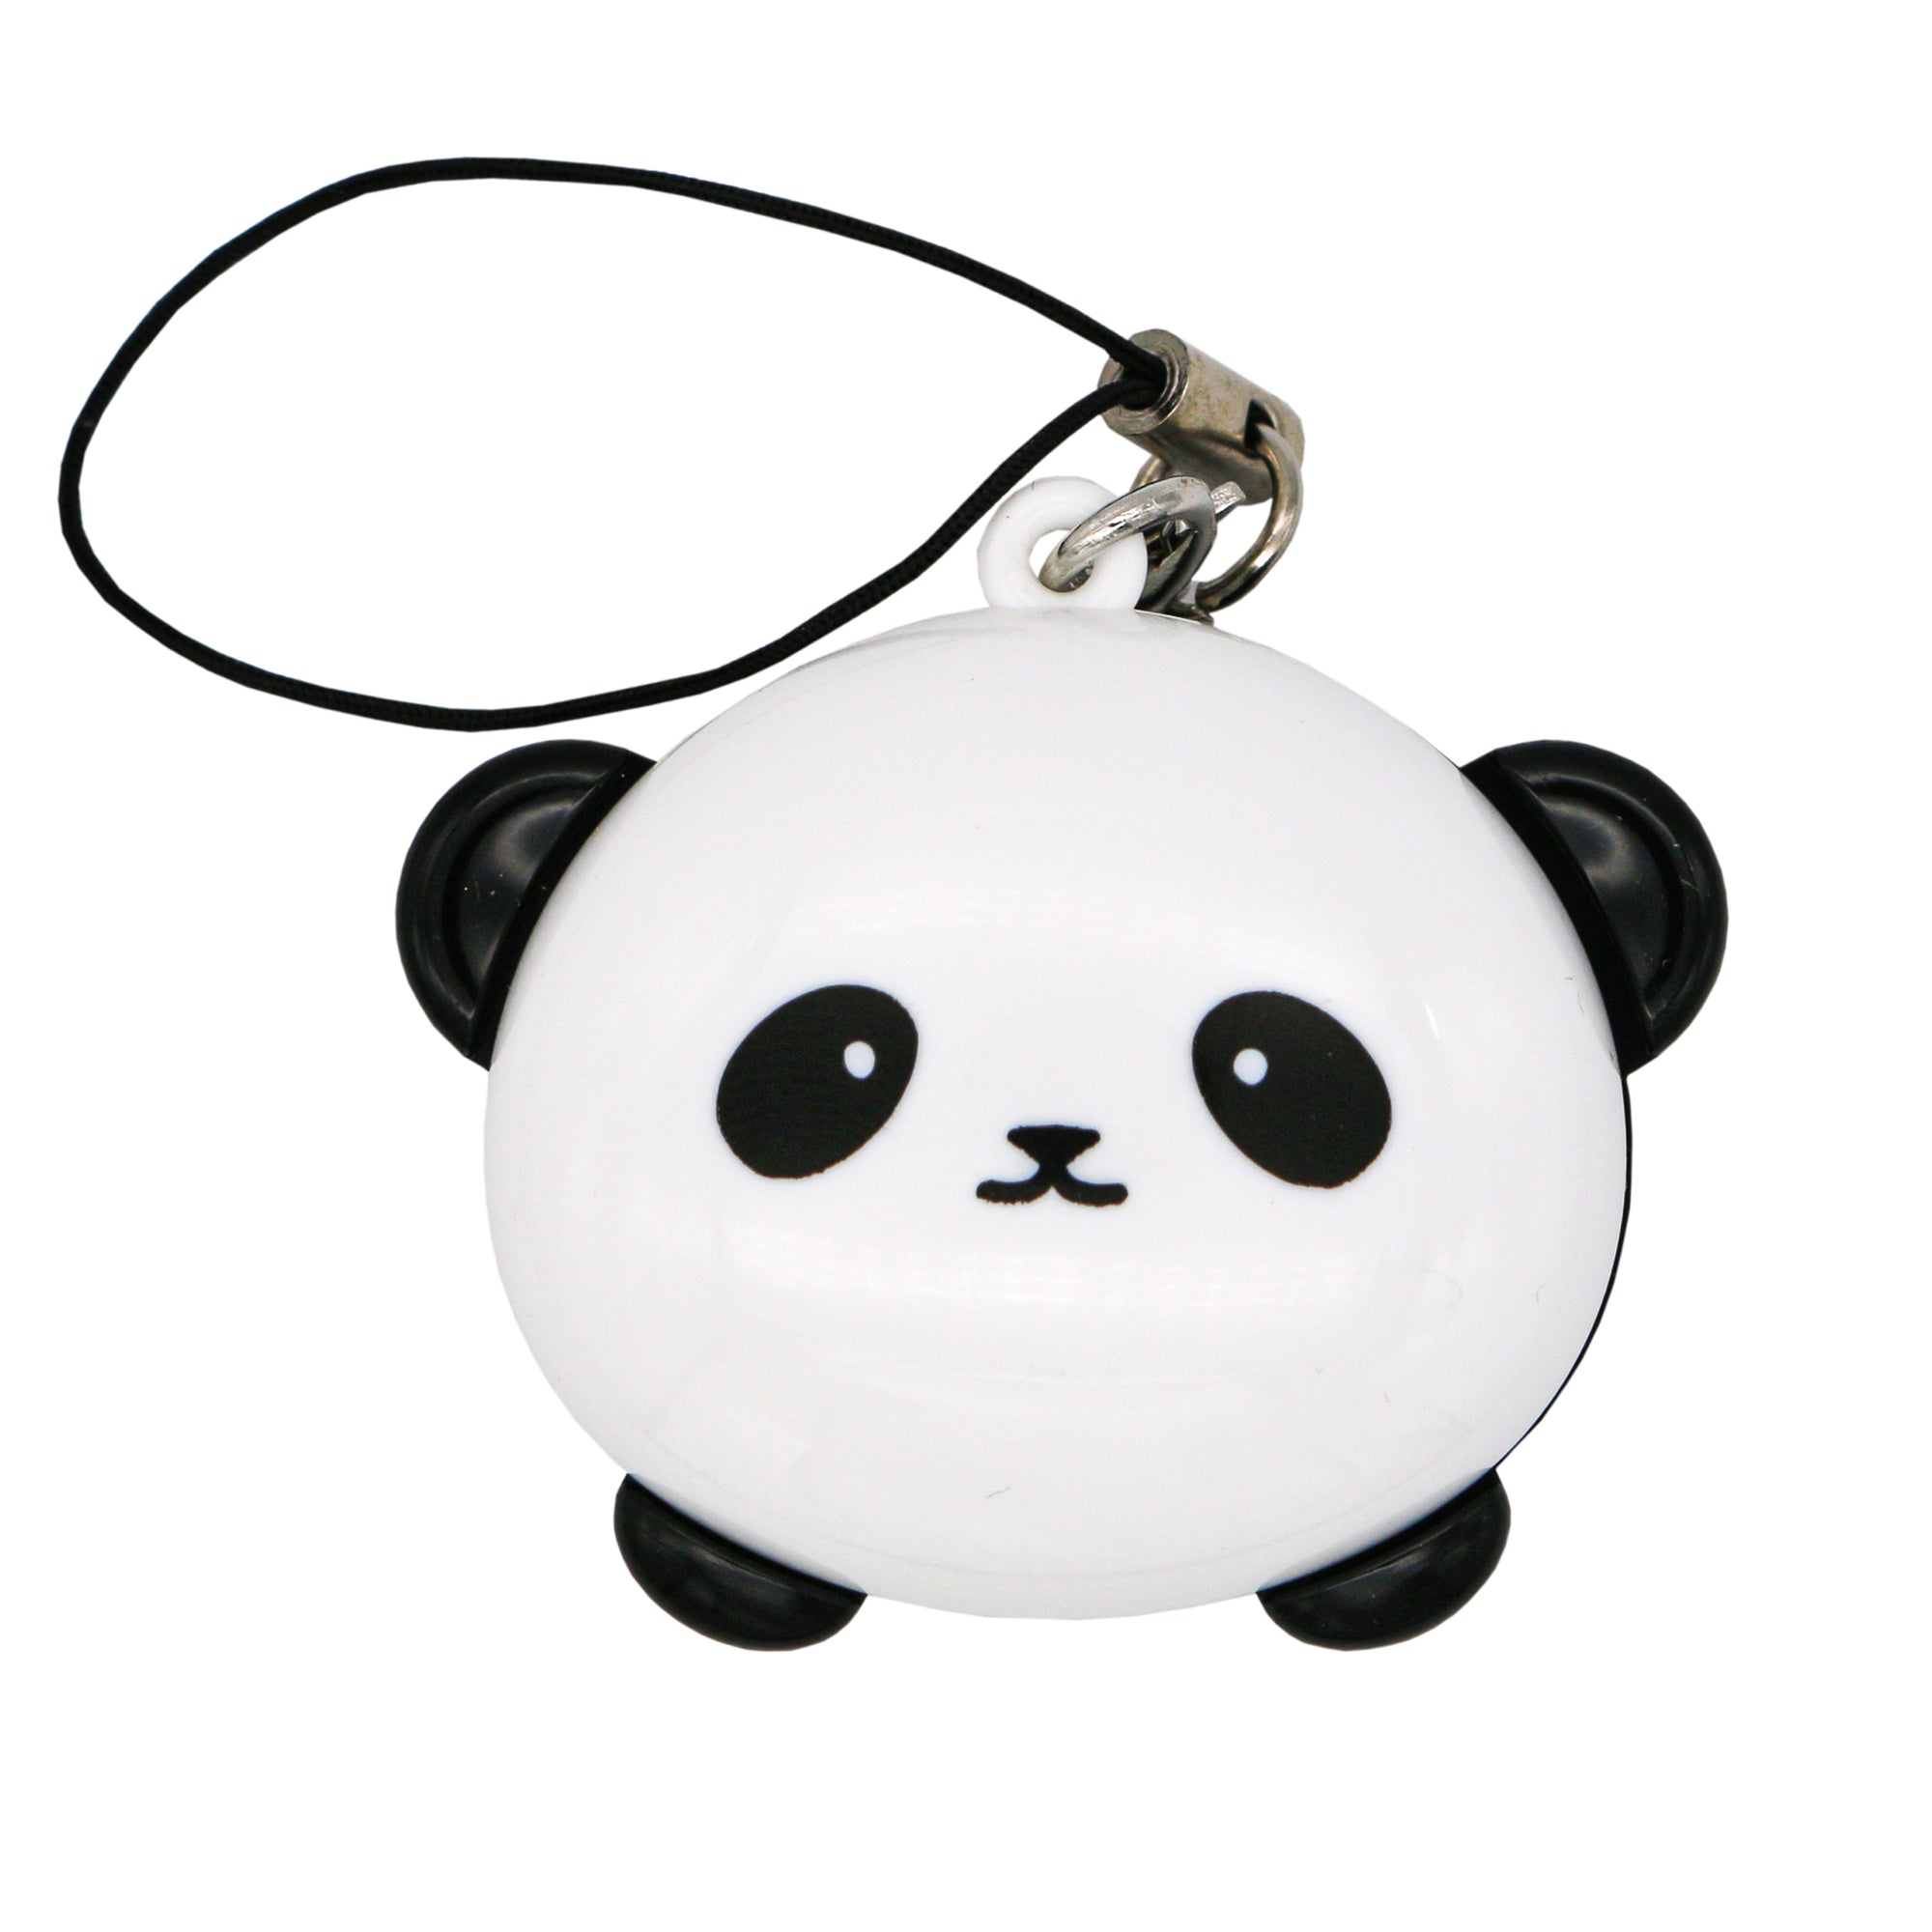 TONYMOLY Panda’s Dream Pocket Lip Balm - Hydrating Cute Travel Size | Korean Skin Care